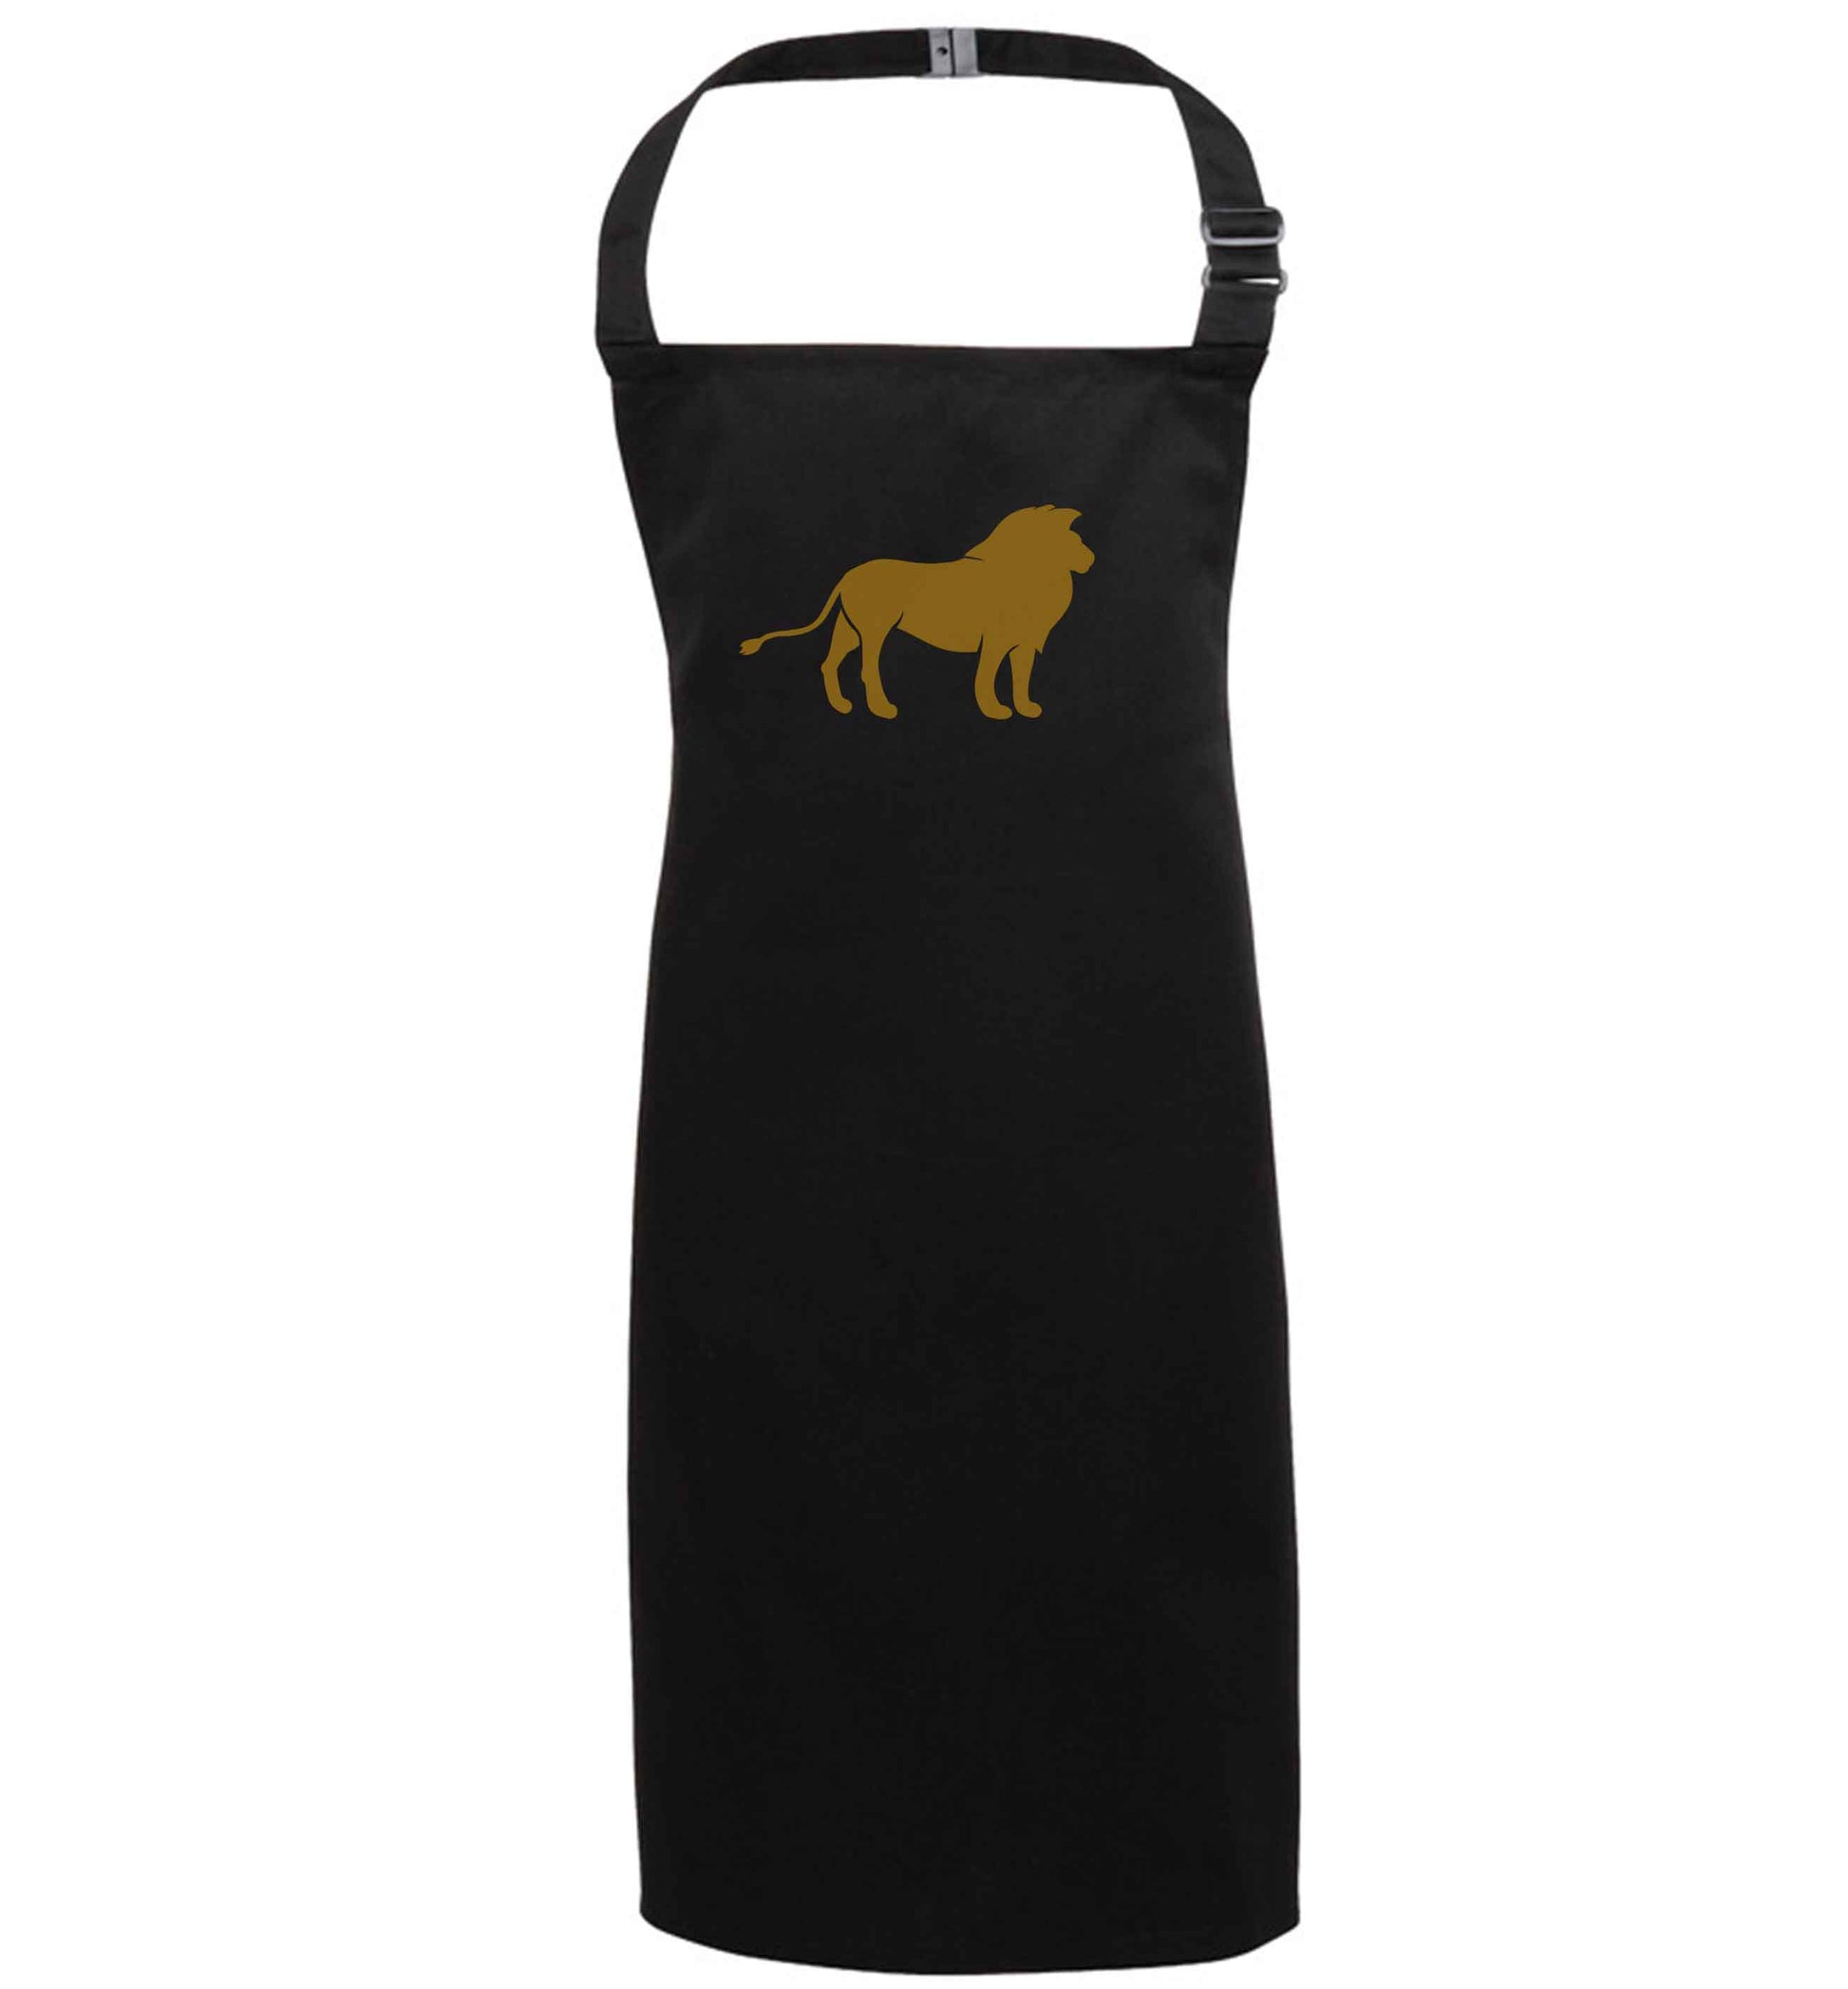 Gold lion black apron 7-10 years